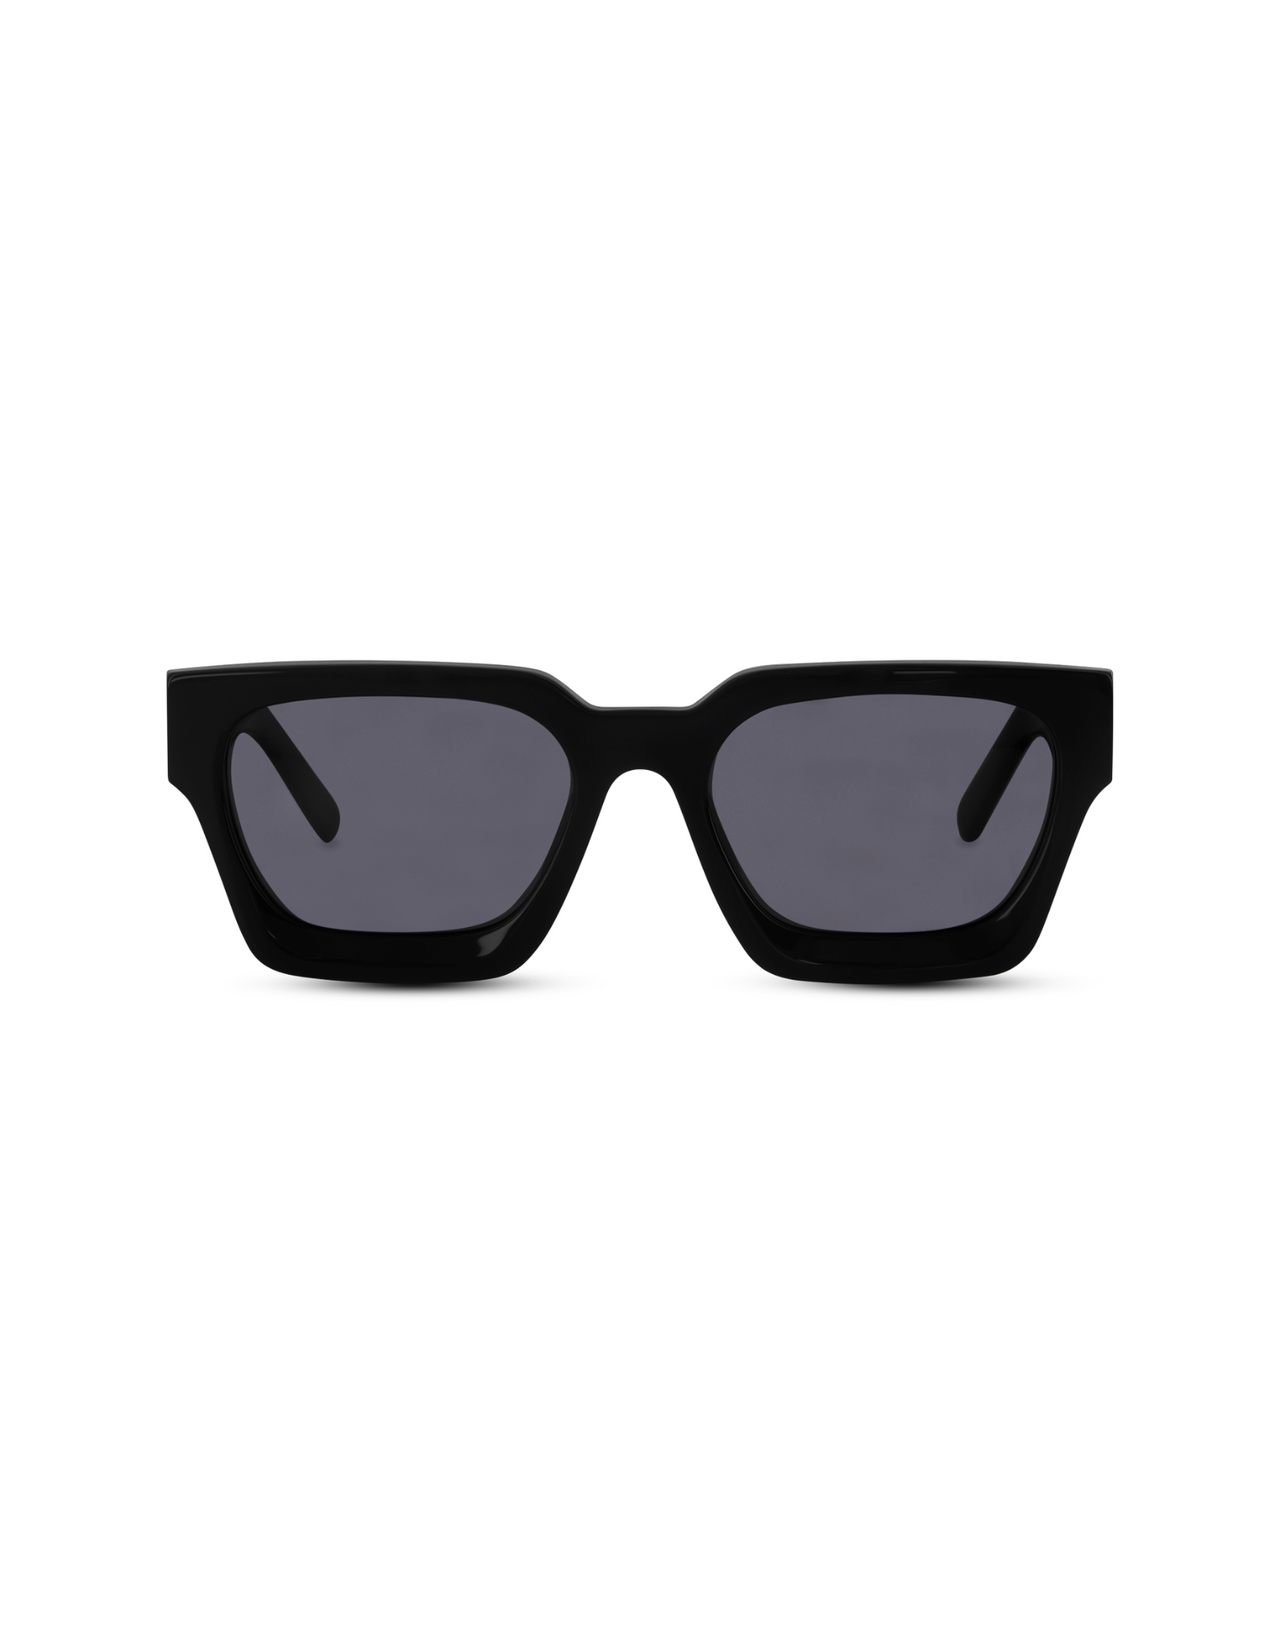 Atelier sunglasses black